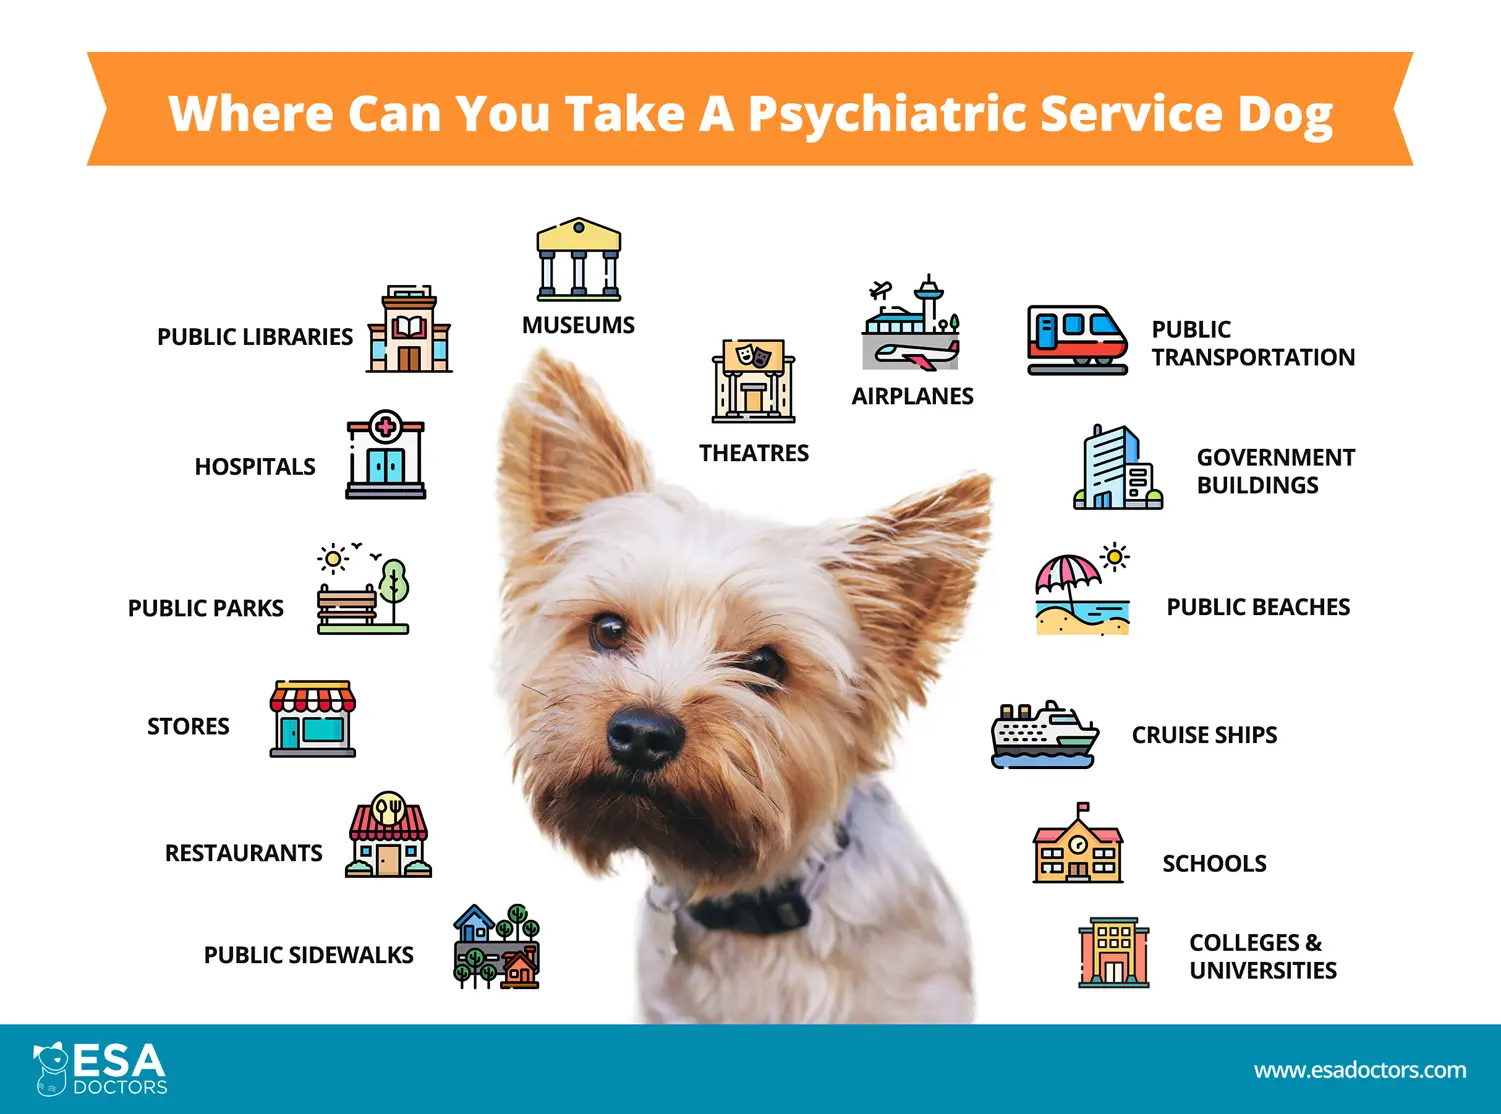 Where Can You Take a Psychiatric Service Dog - ESA Doctors